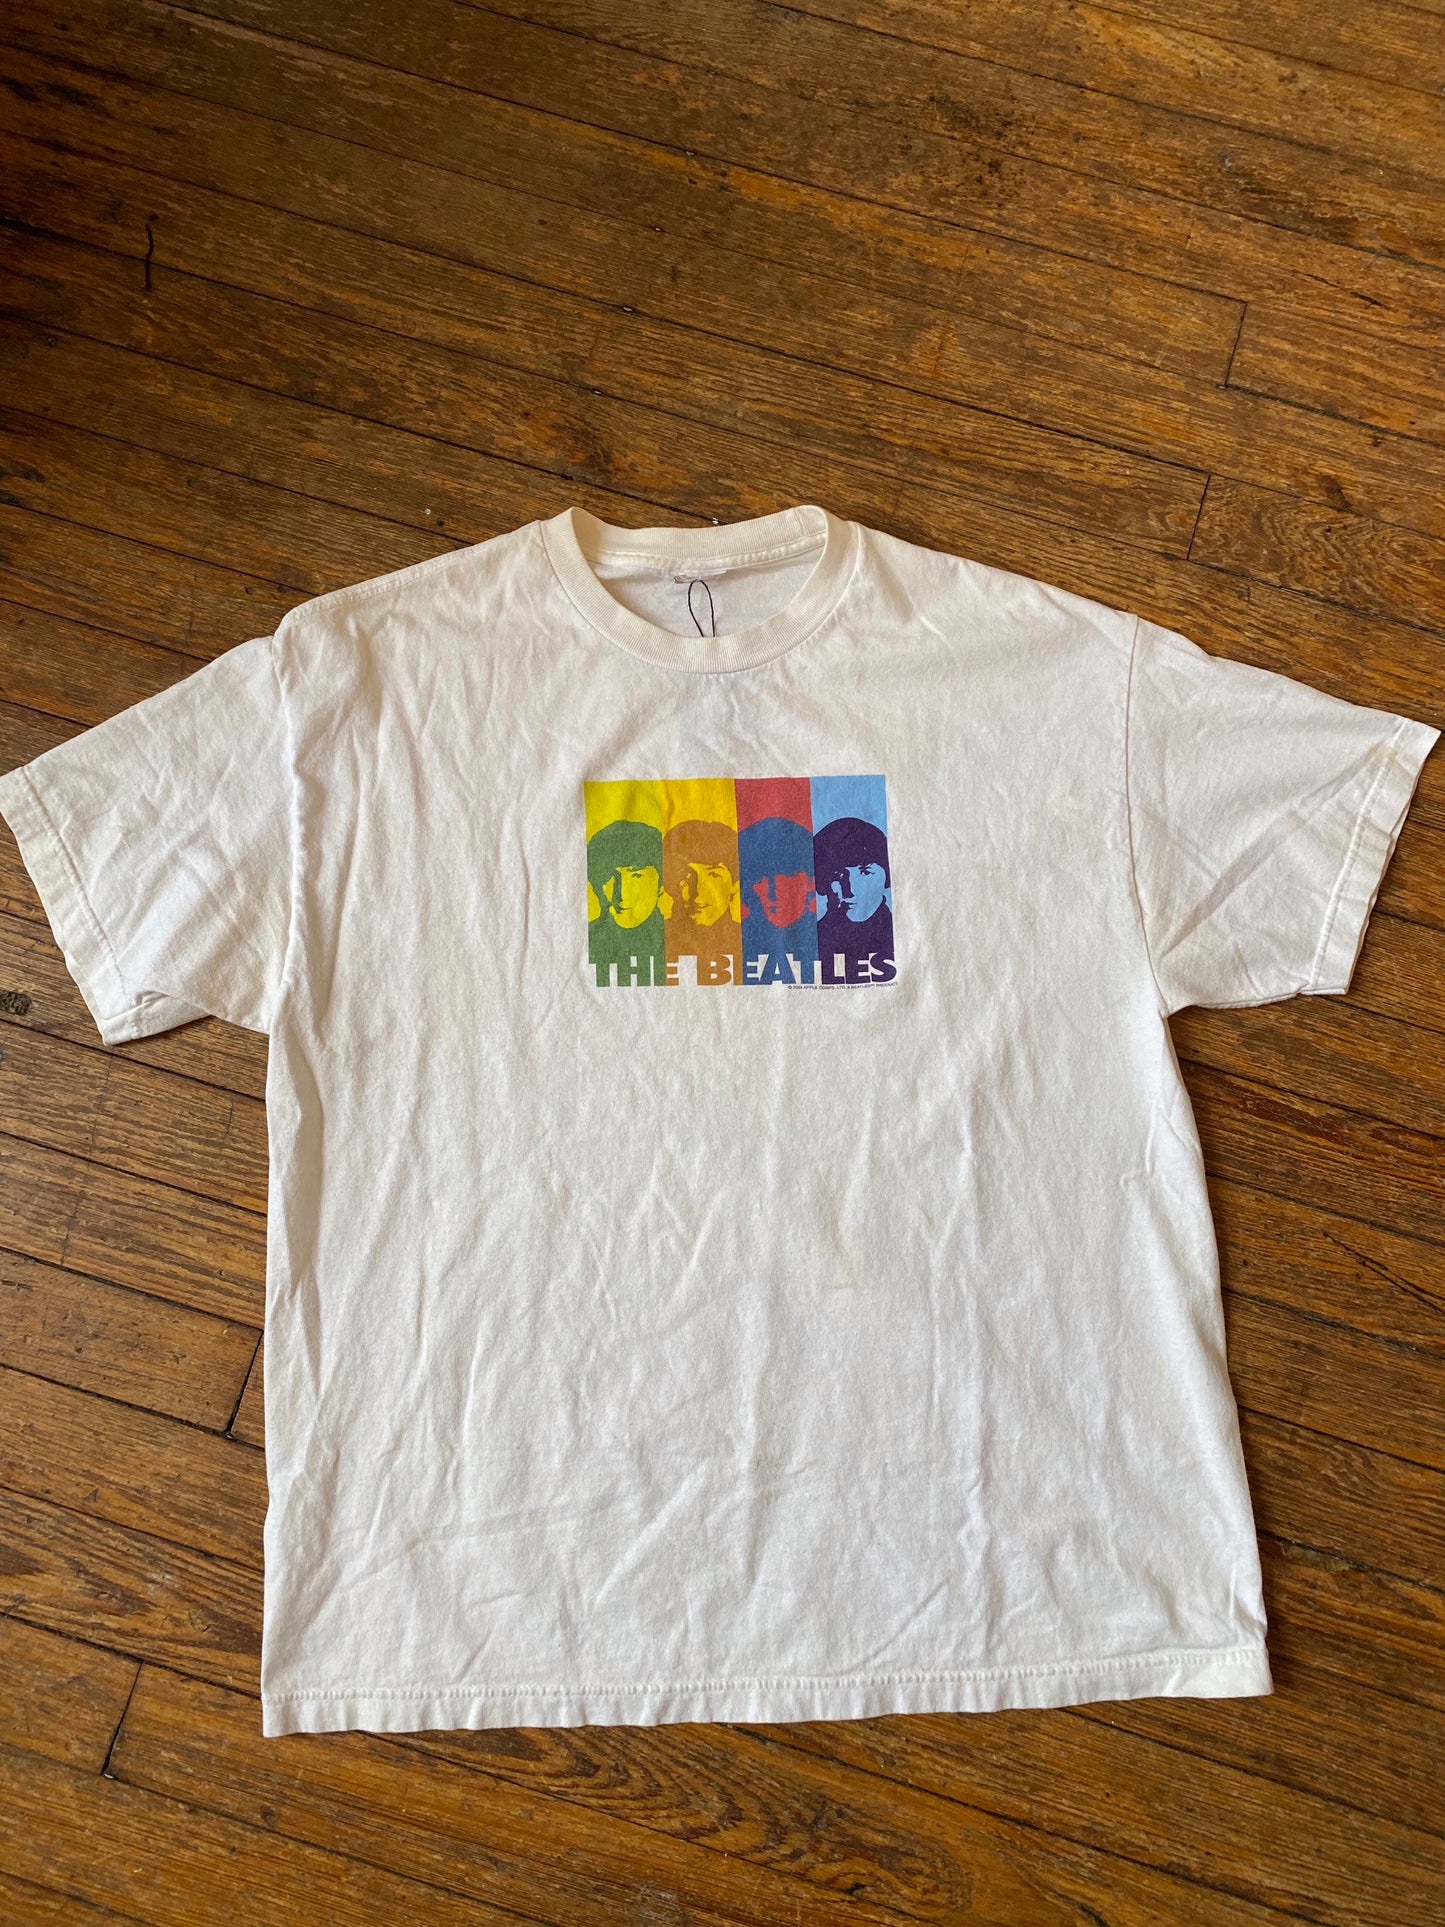 2004 Beatles Apple Corps Shirt